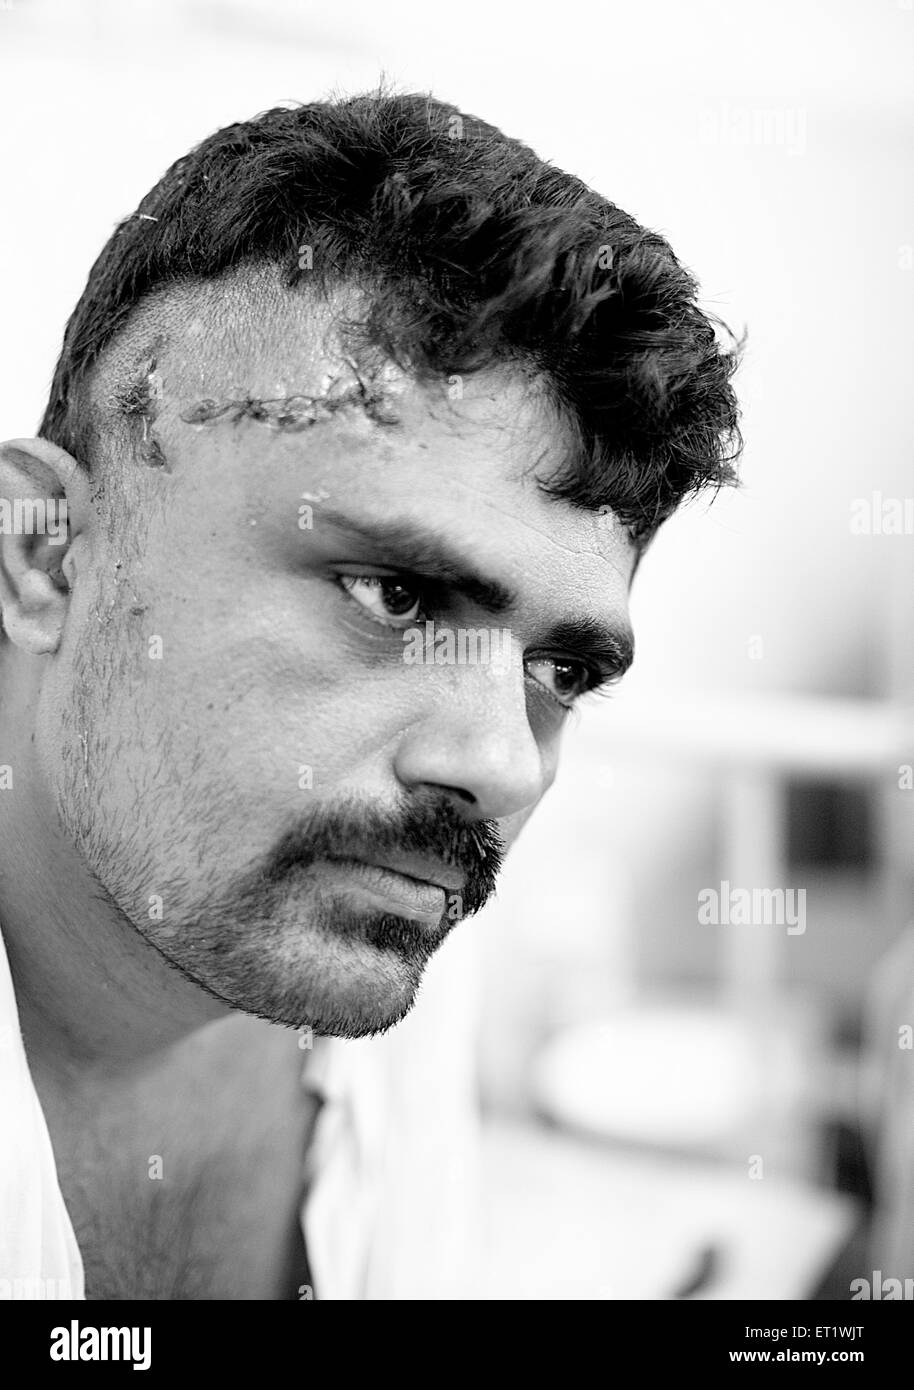 Abdul Rashid Bürgerin verletzten erholt sich im Krankenhaus JJ während den letzten Bombe am 26. November 2008 sprengt Mumbai Stockfoto